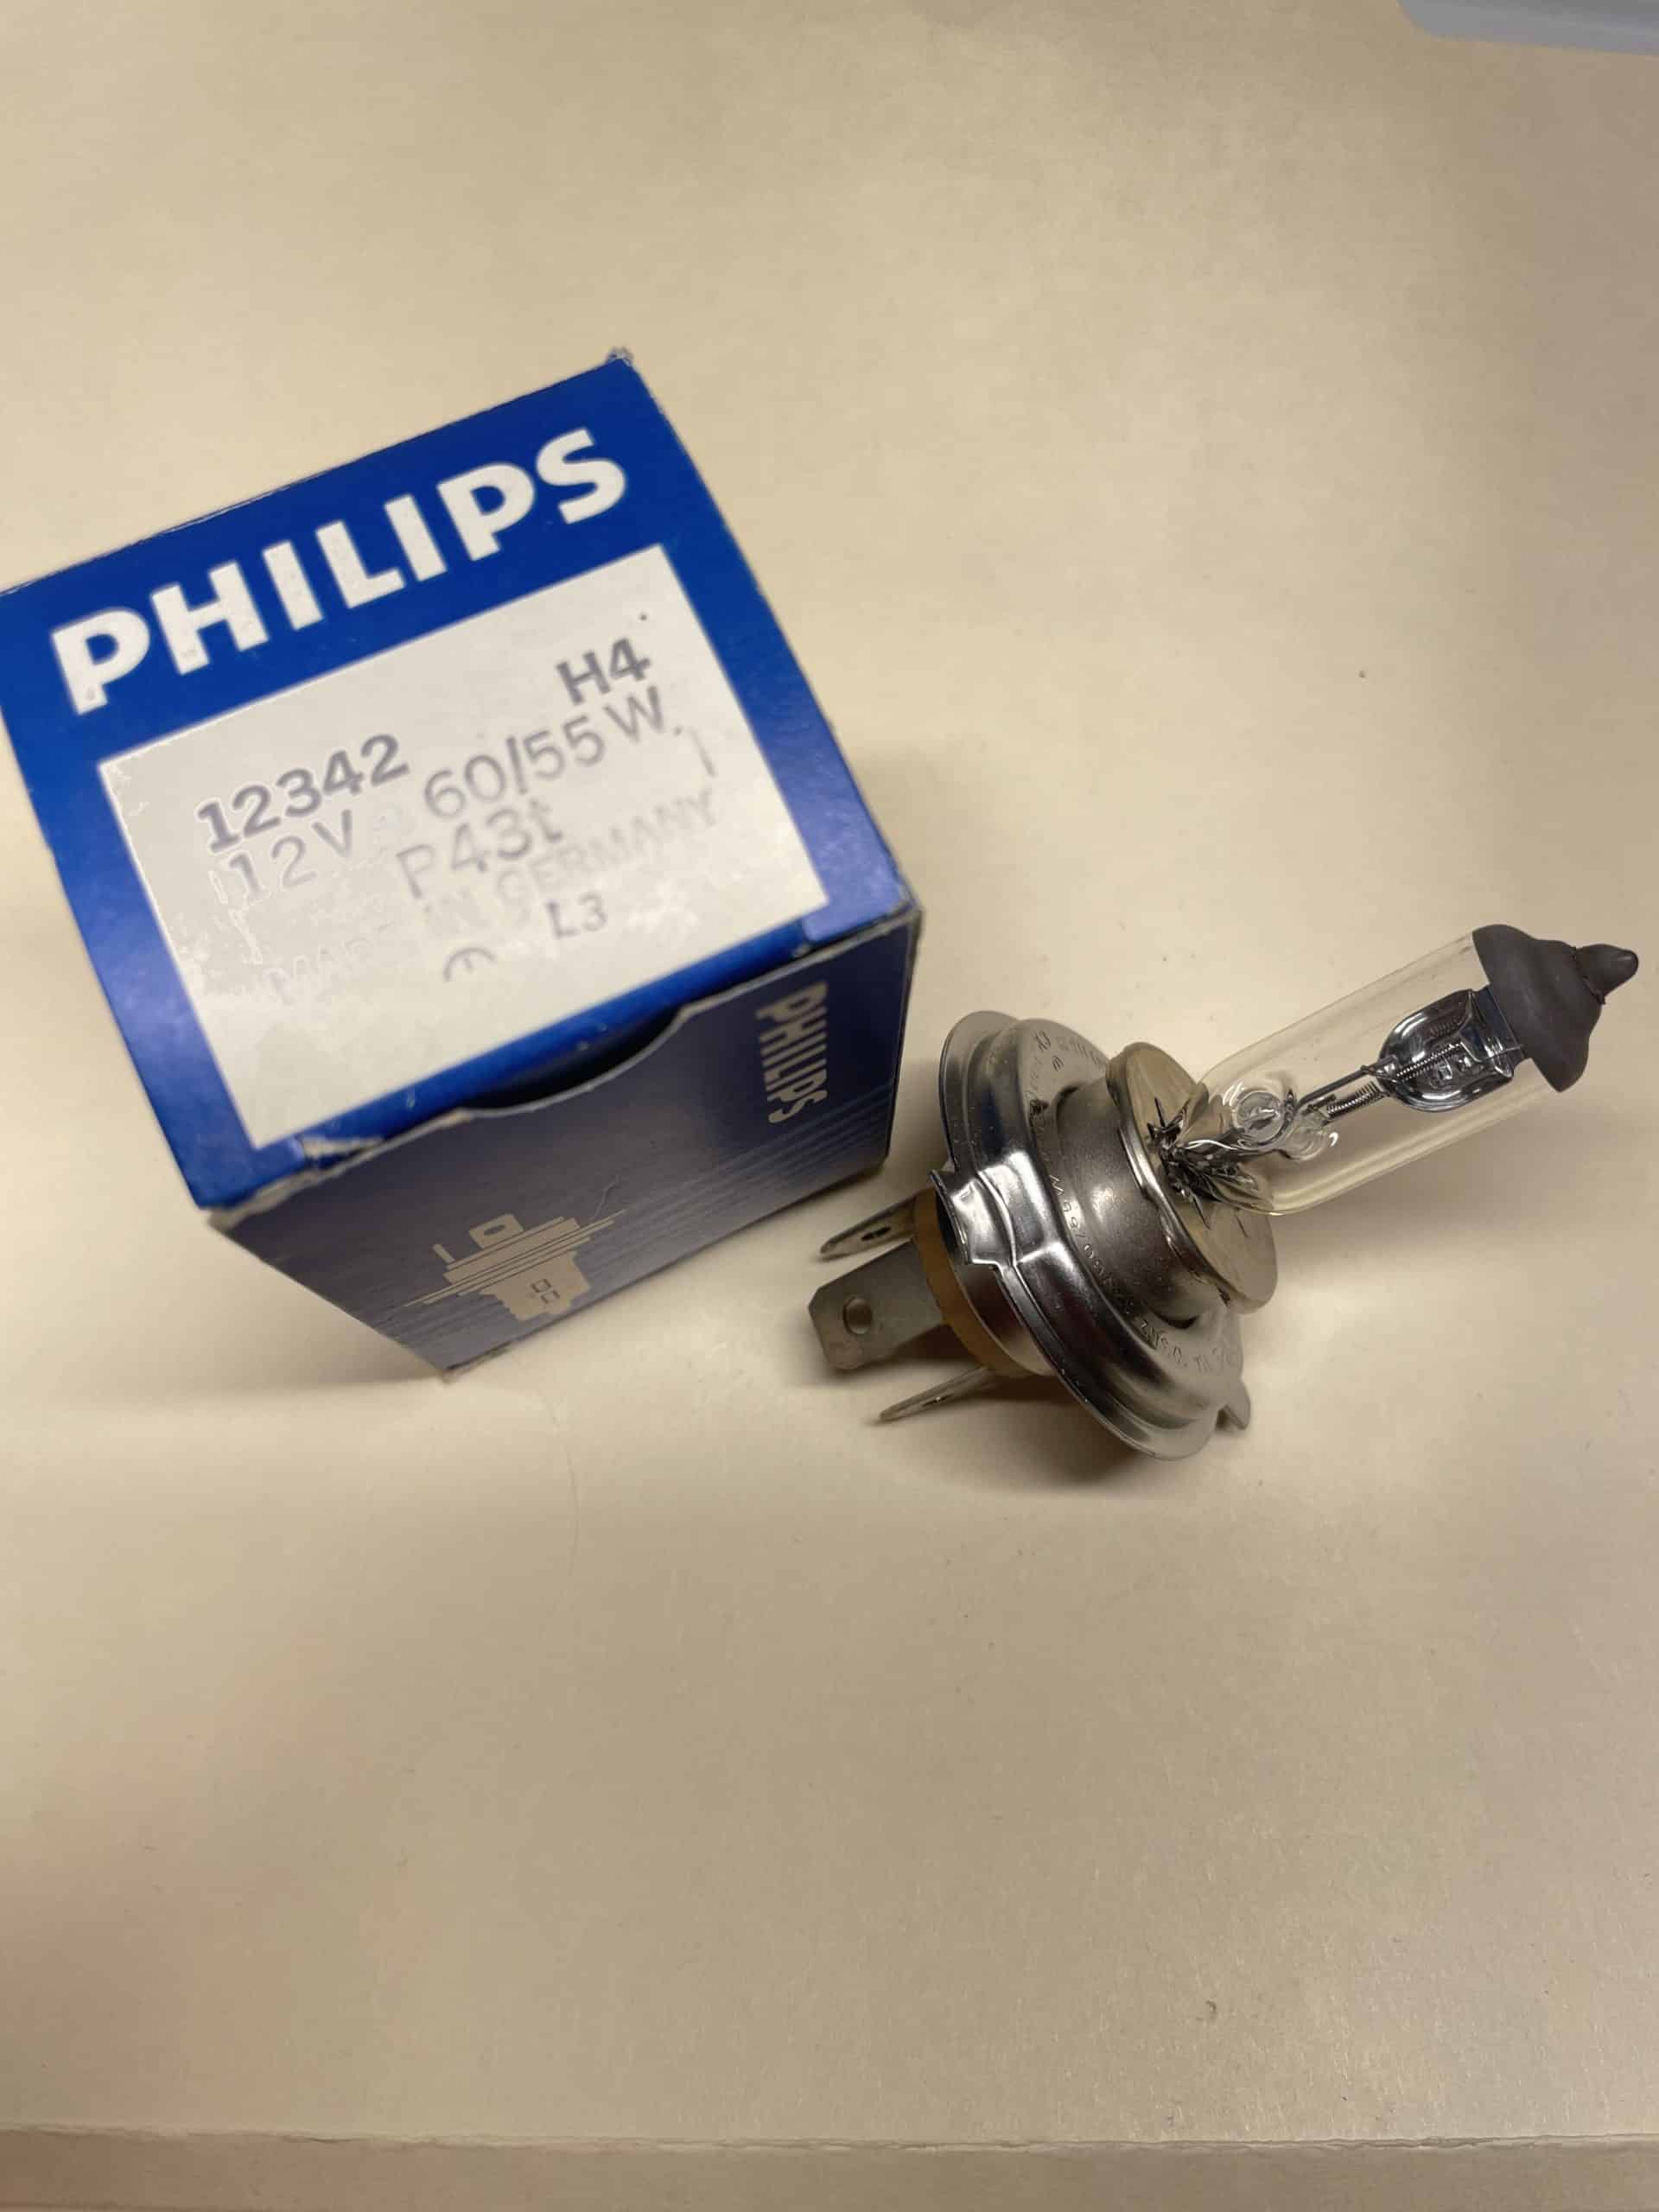 Philips Halogen H4 bulb 12342 p43t 60/55w